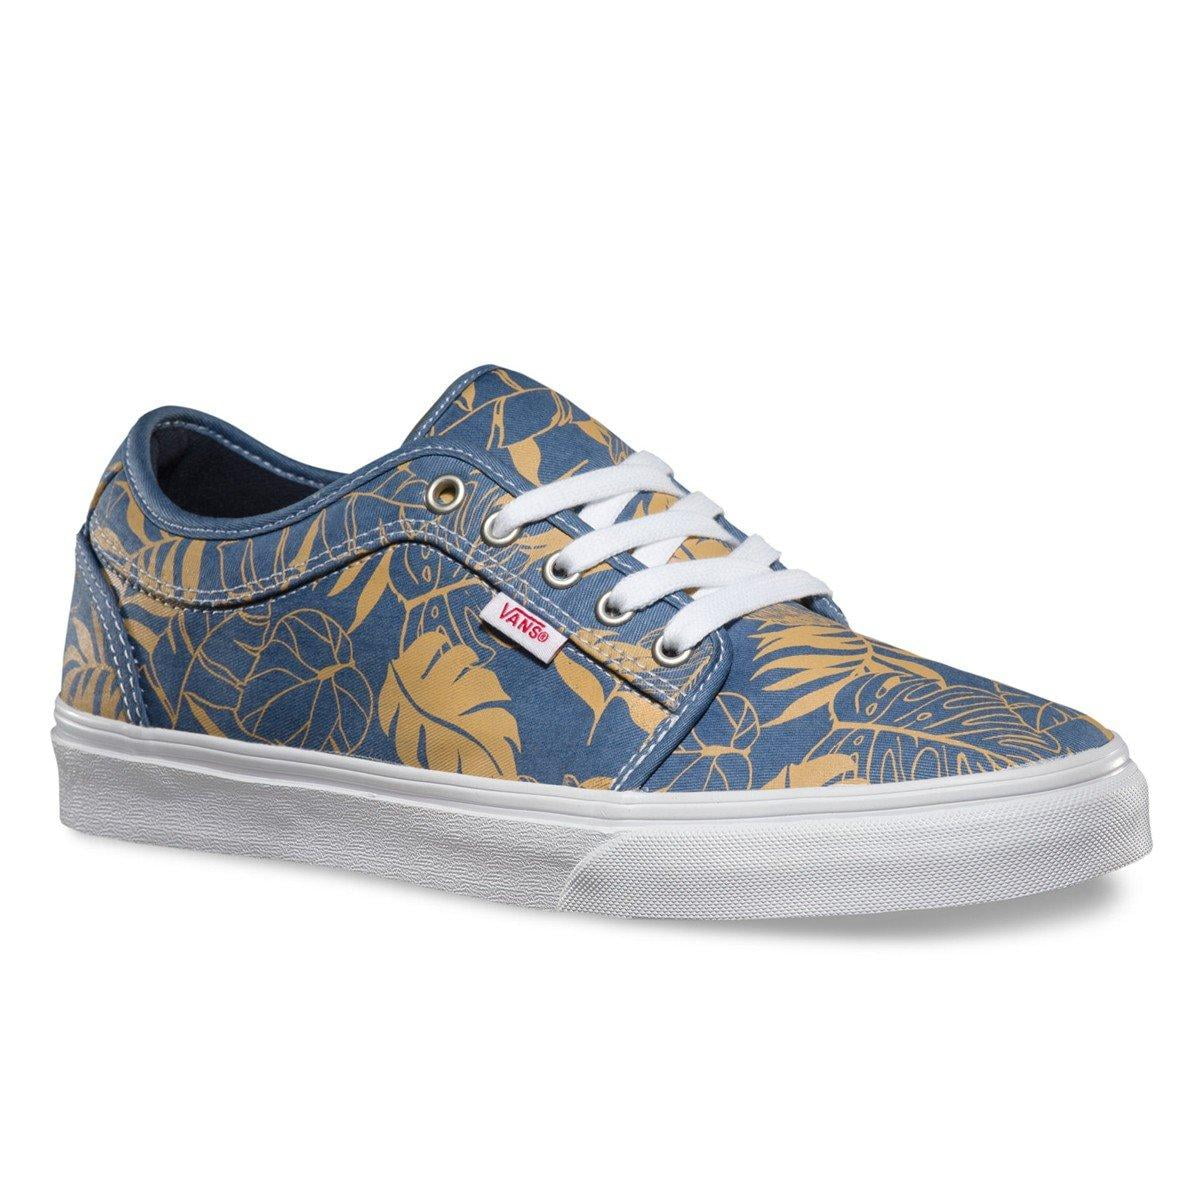 Vans Chukka Low Men's Skateboarding Shoes (Leaves) Blue Twill - Walmart.com